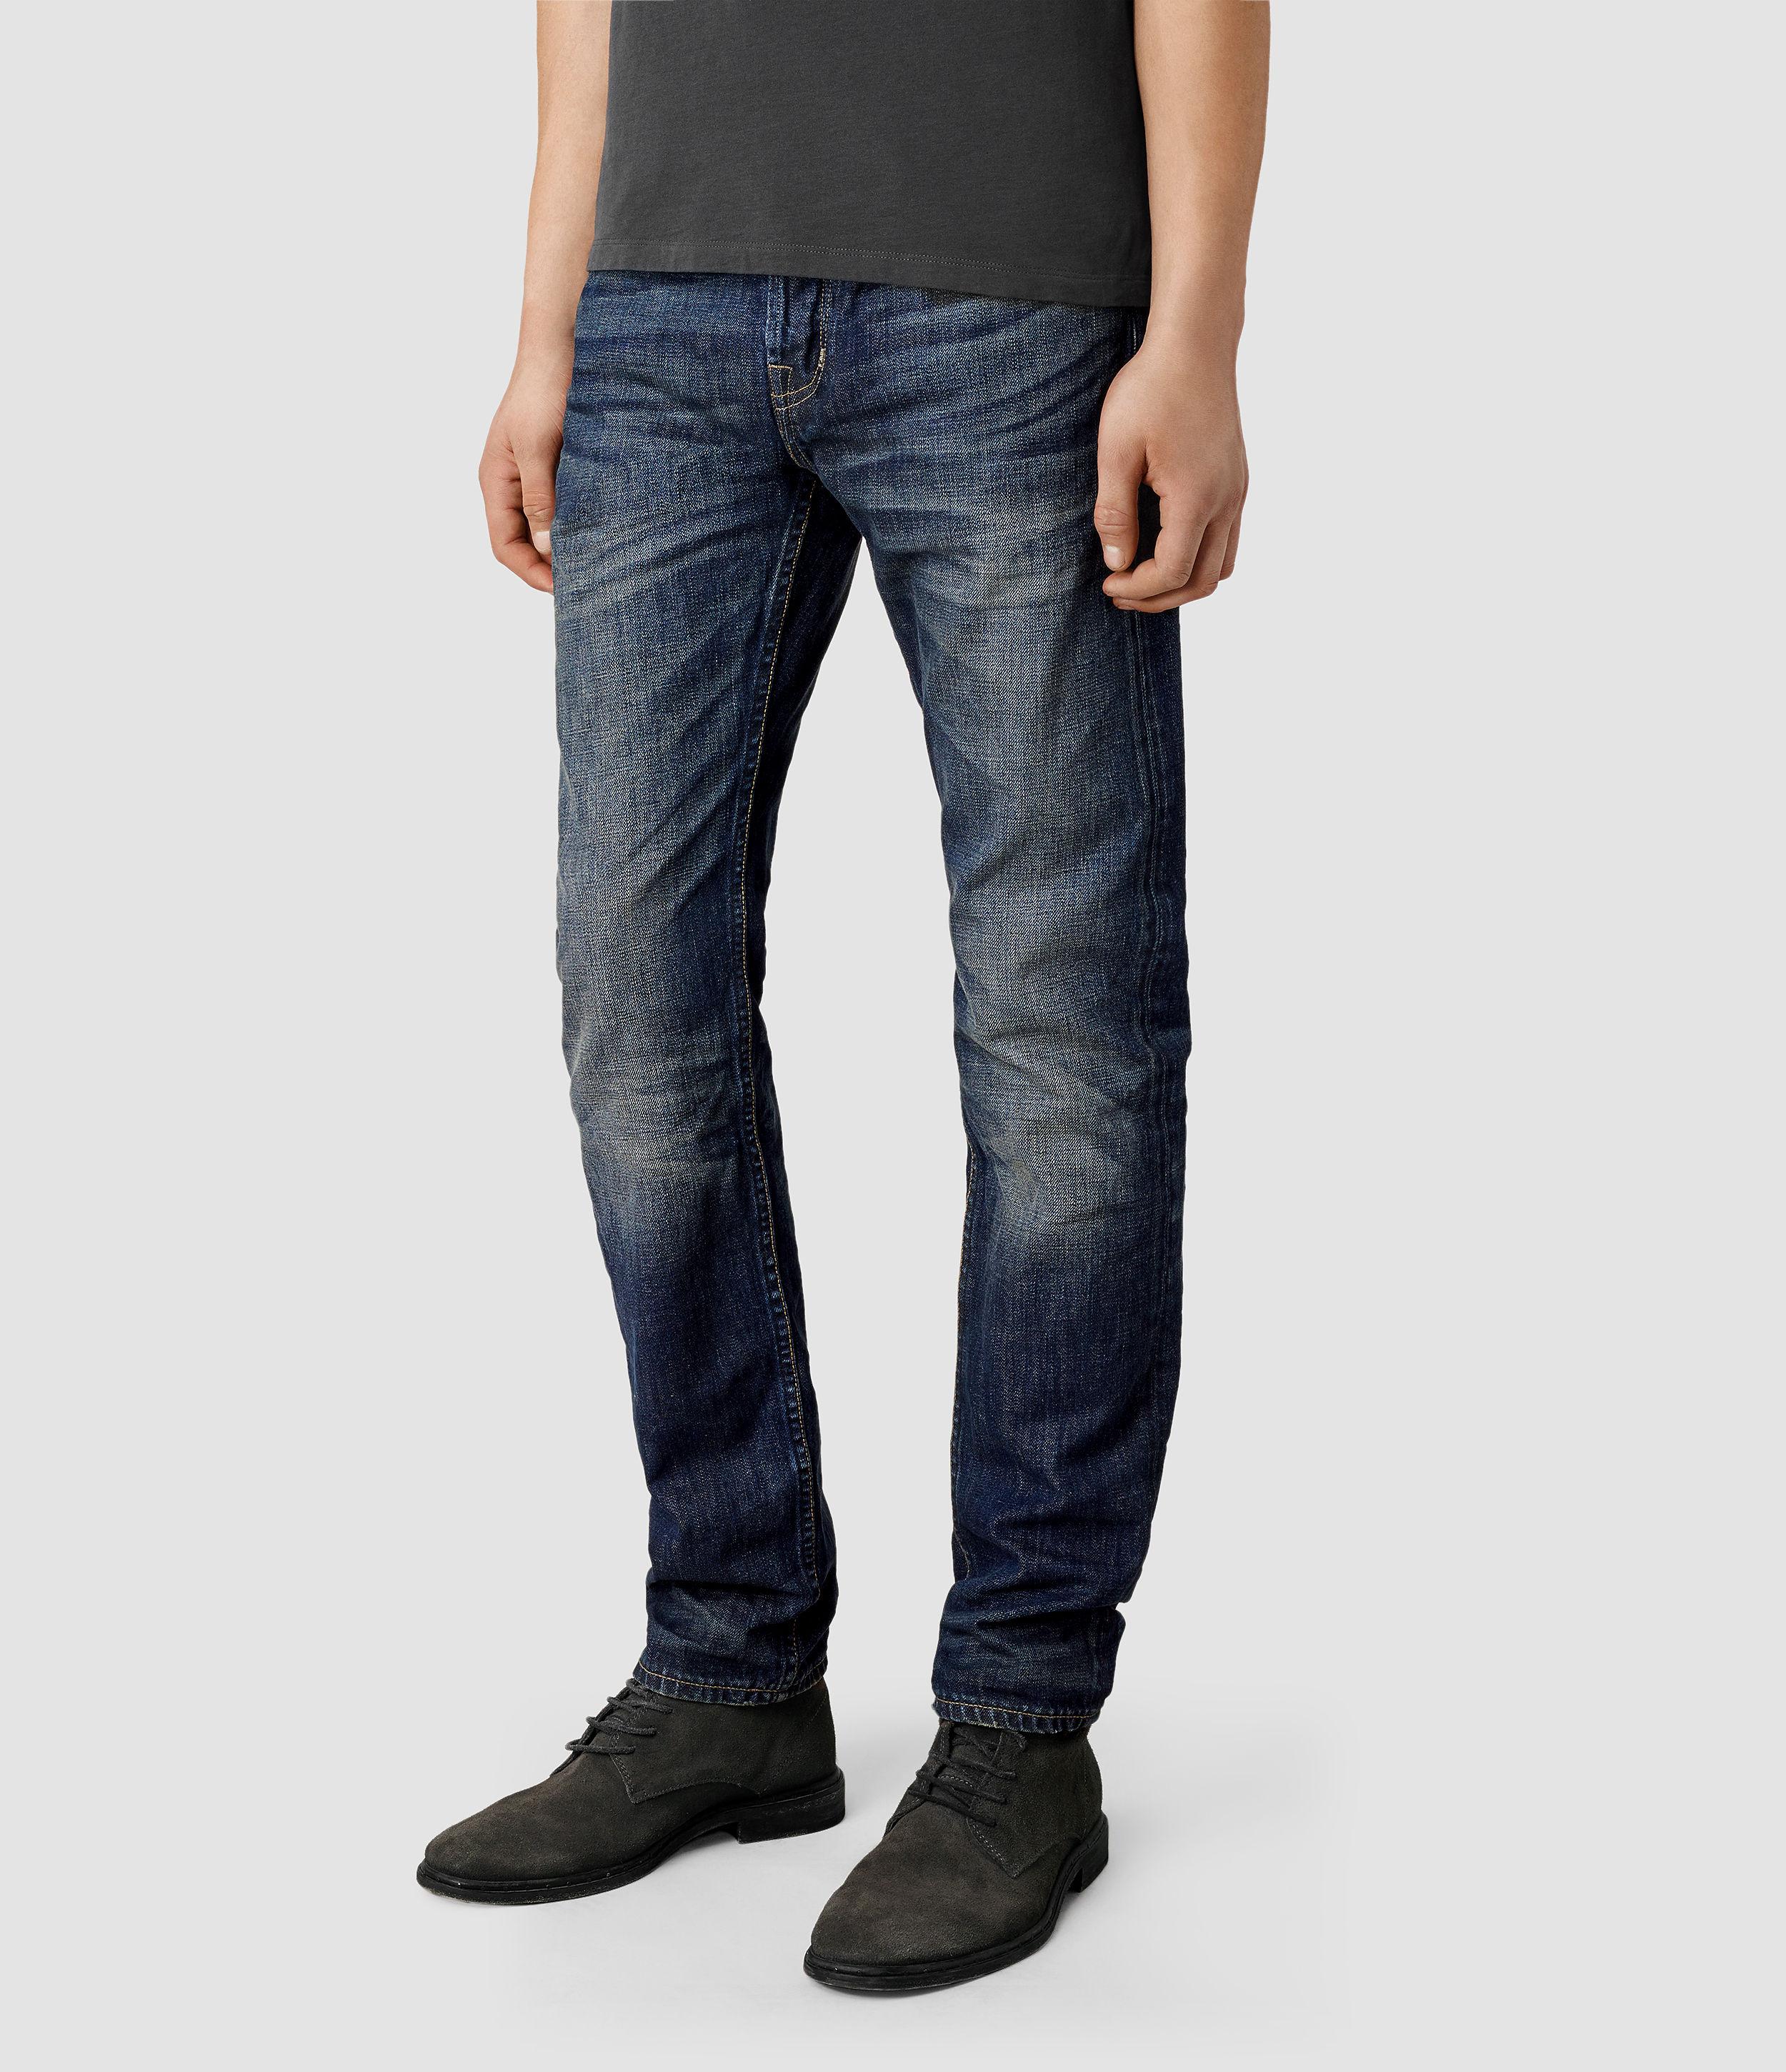 AllSaints Denim Amori Iggy Jeans in Indigo (Blue) for Men - Lyst